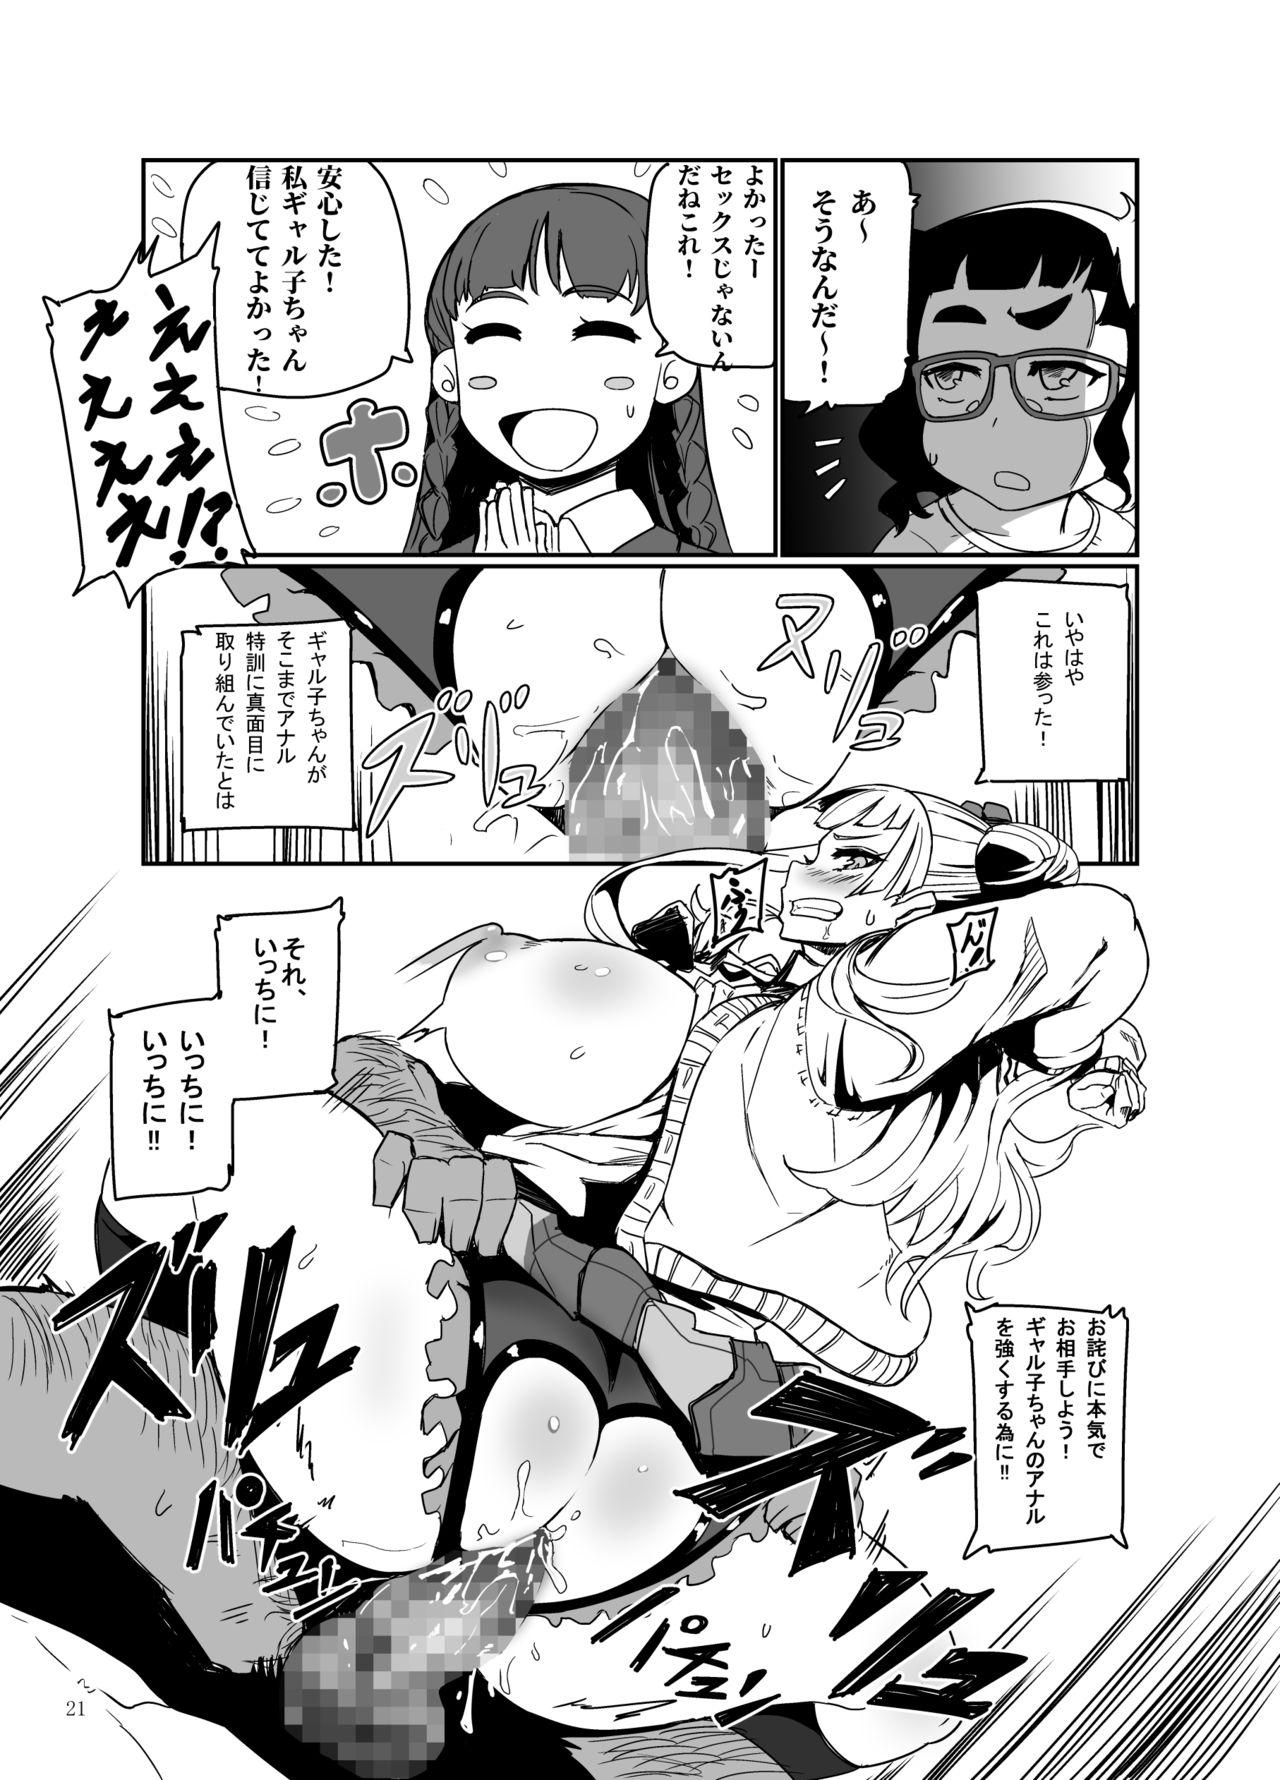 Doggy Galko Ah! - Oshiete galko chan Tan - Page 20